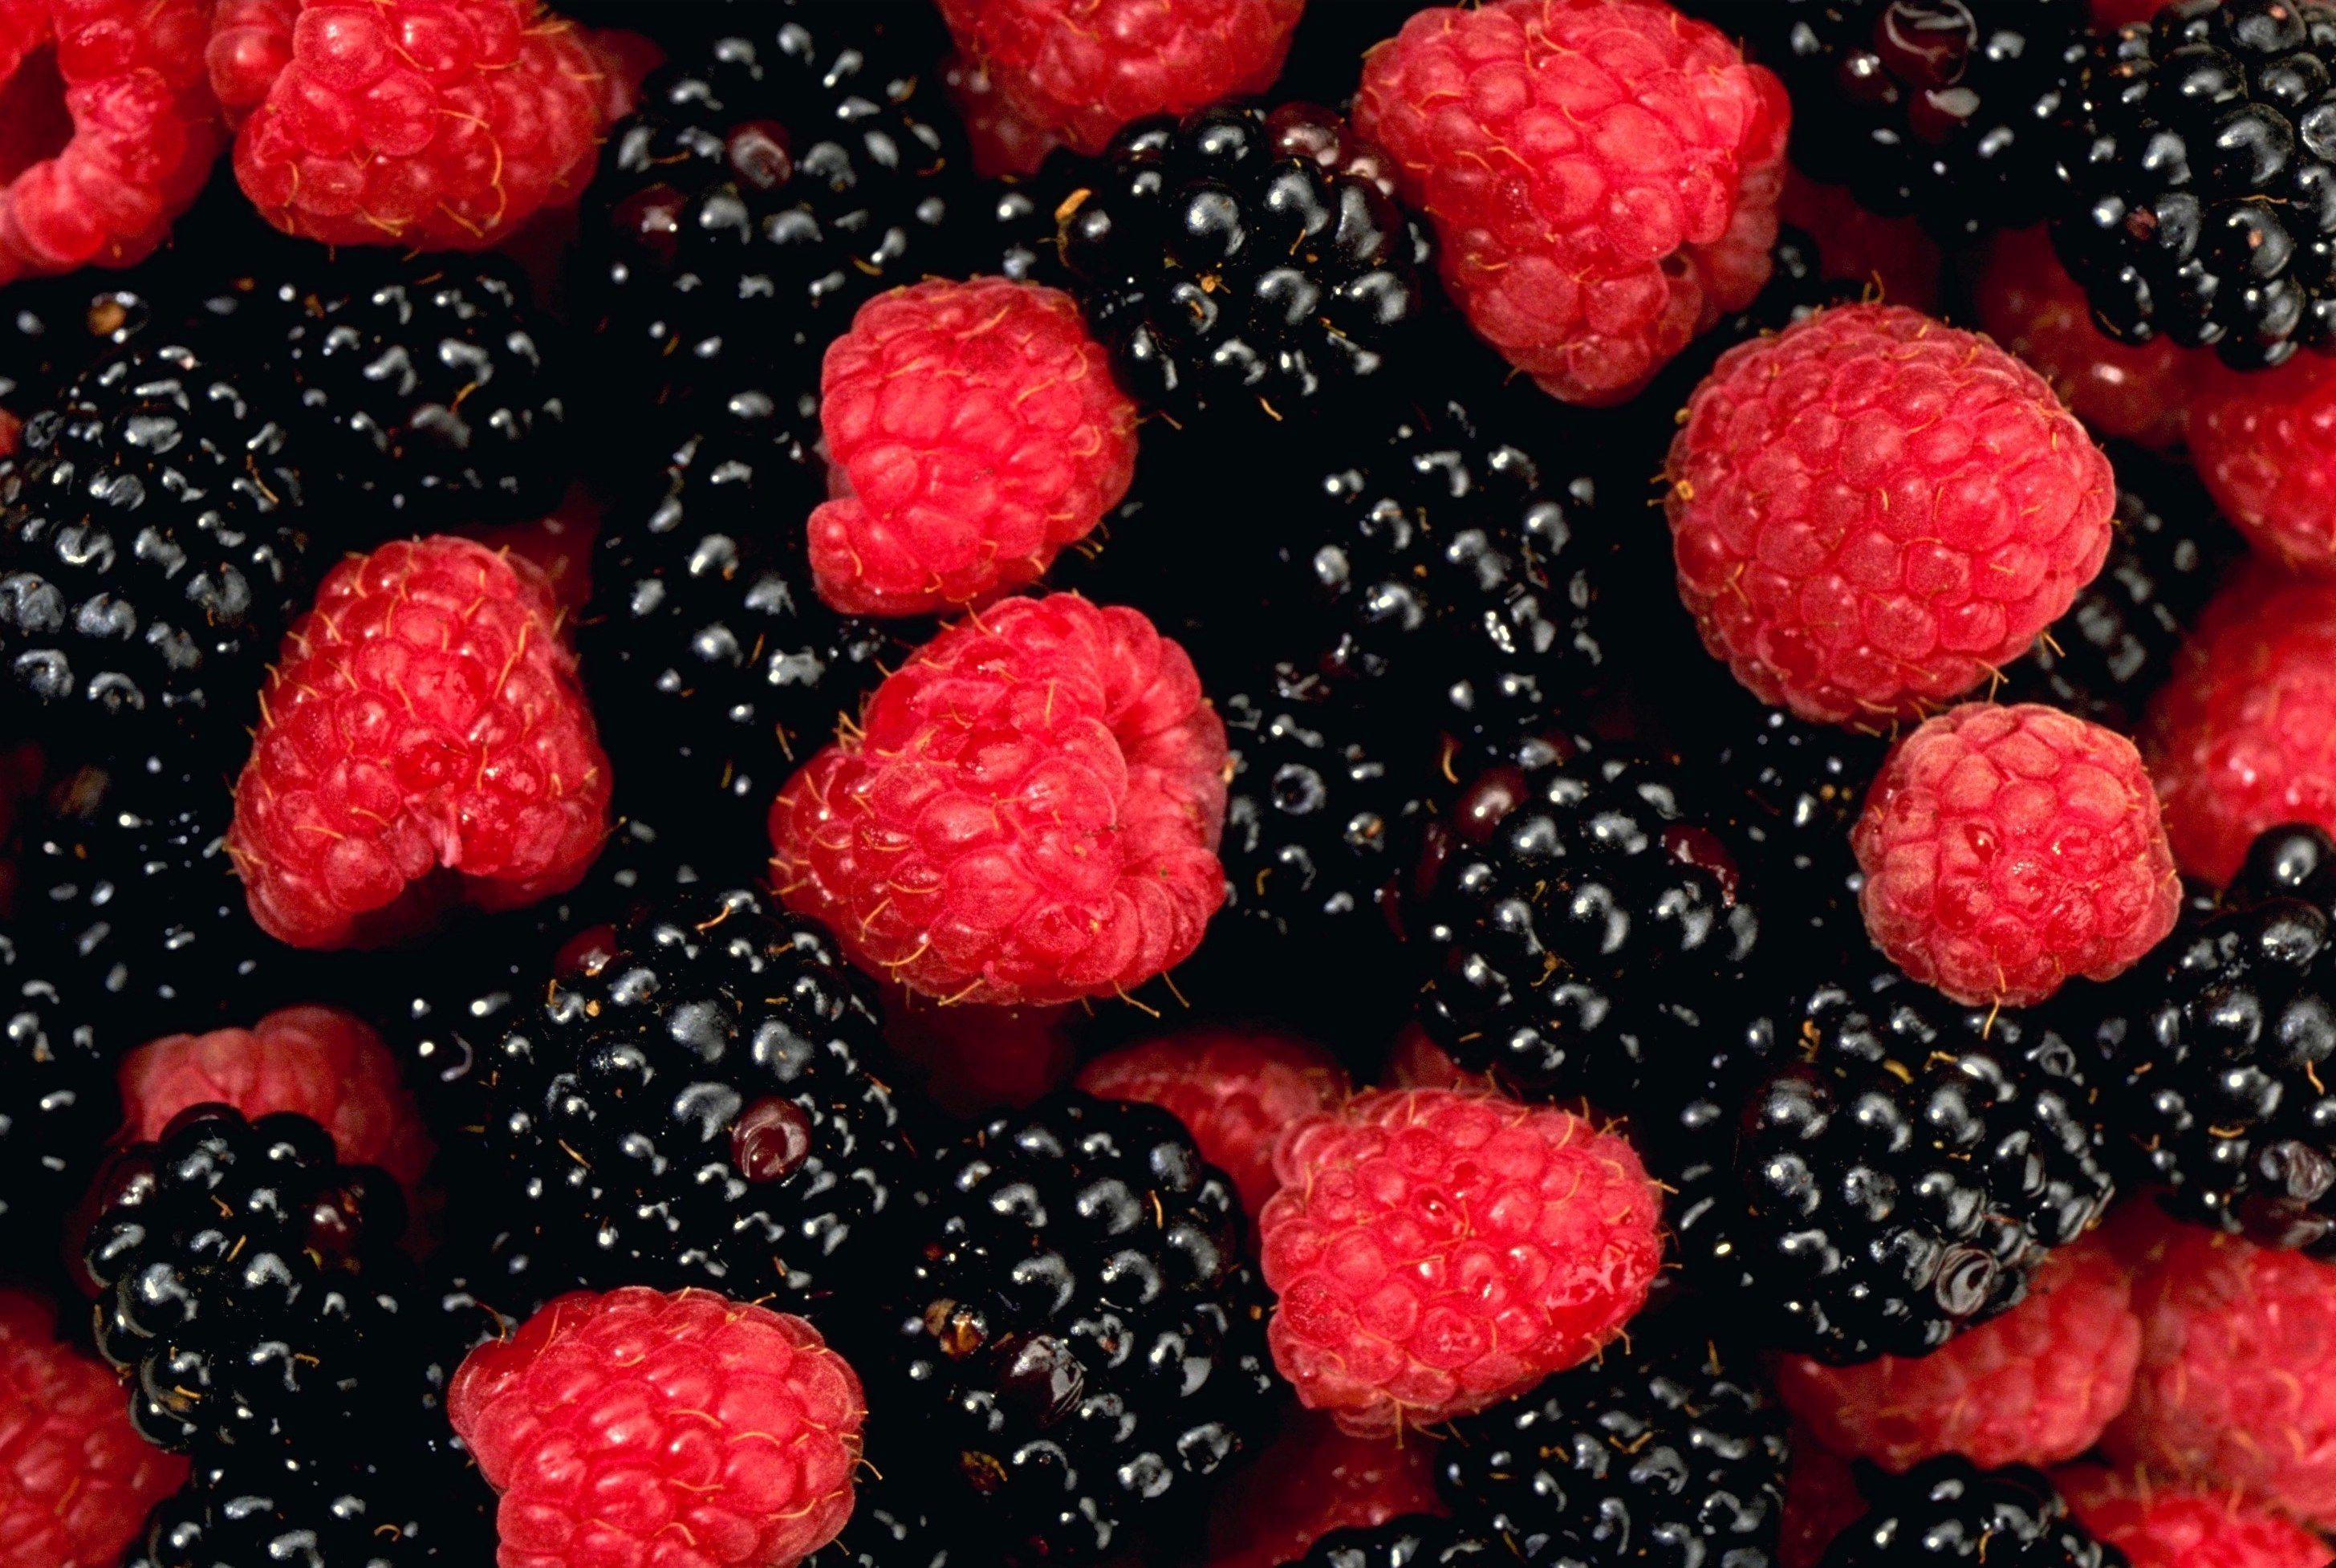 Wallpapers Fruit Raspberry Food Image Download